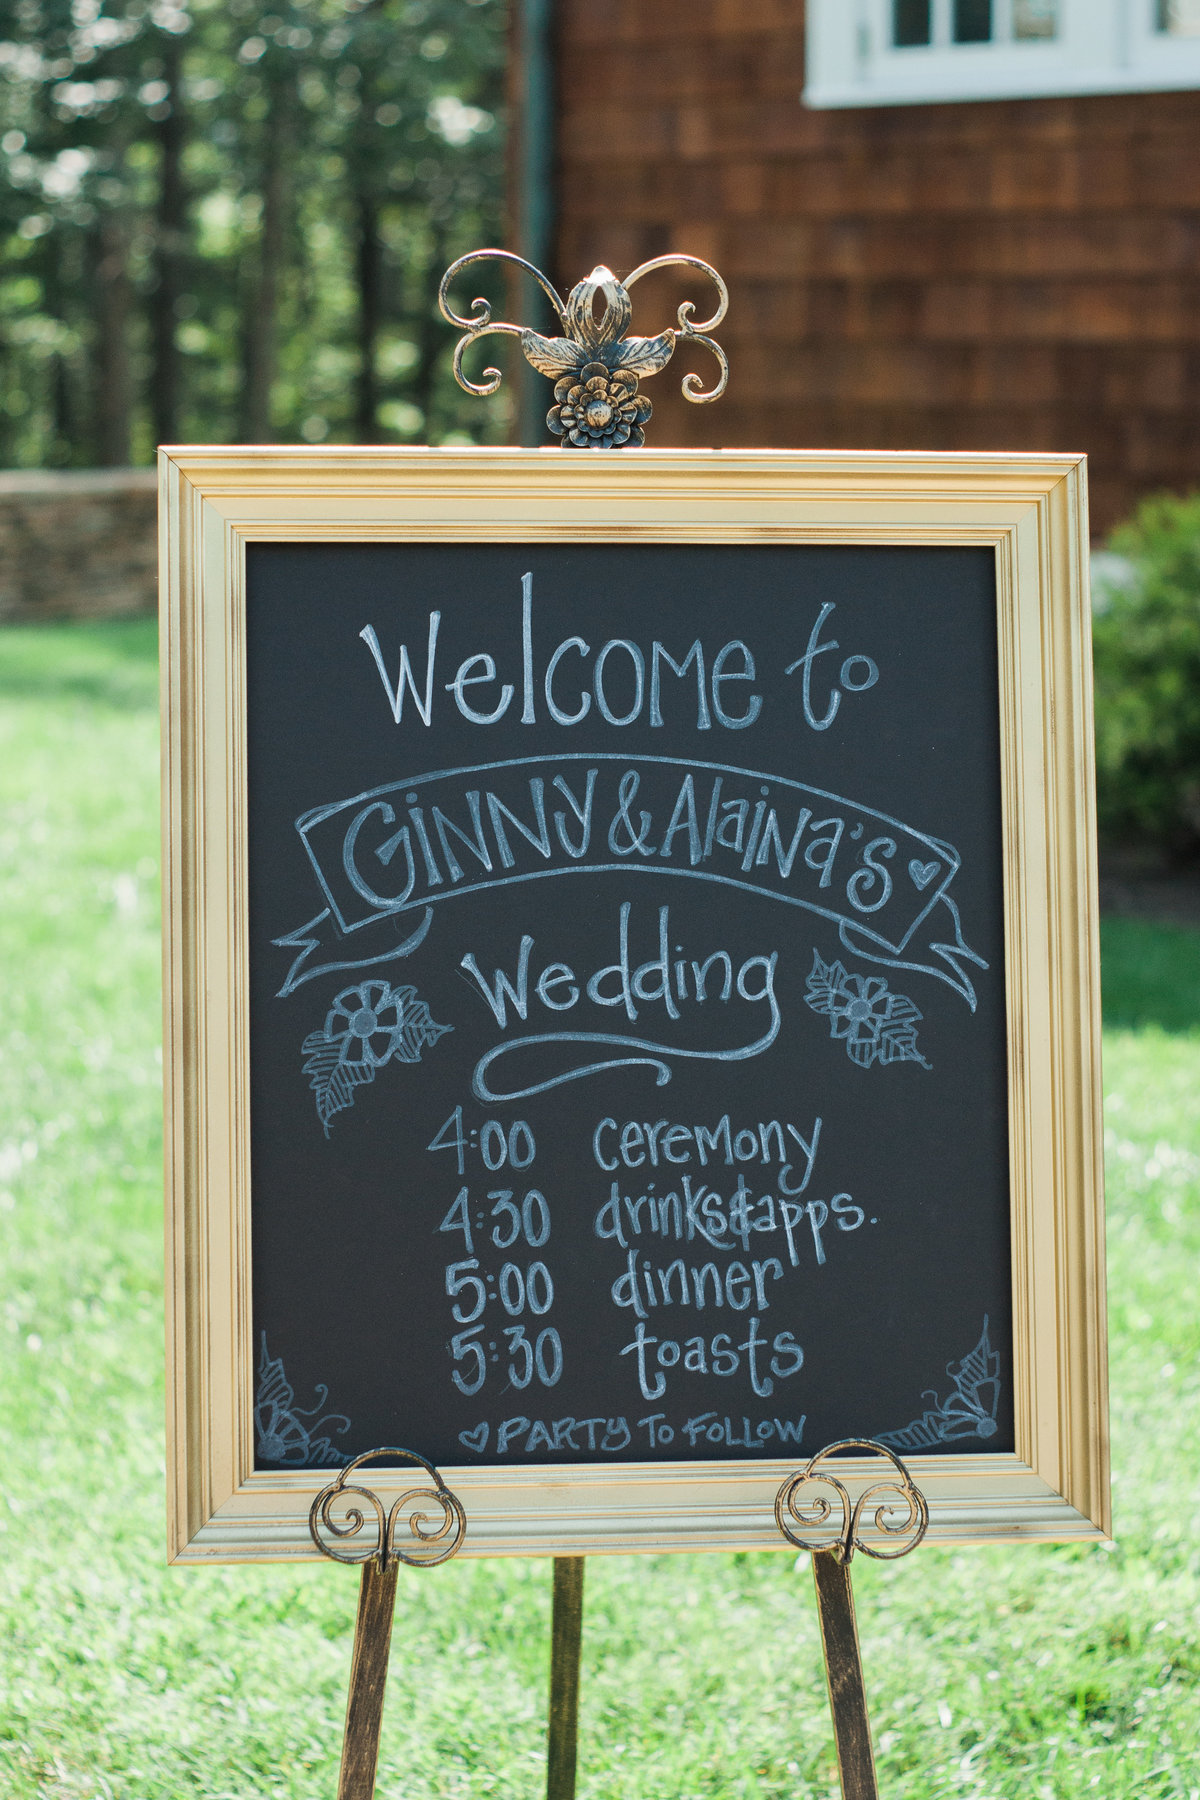 Intimate outdoor wedding photographed by Boone Wedding Photographer Wayfaring Wanderer.